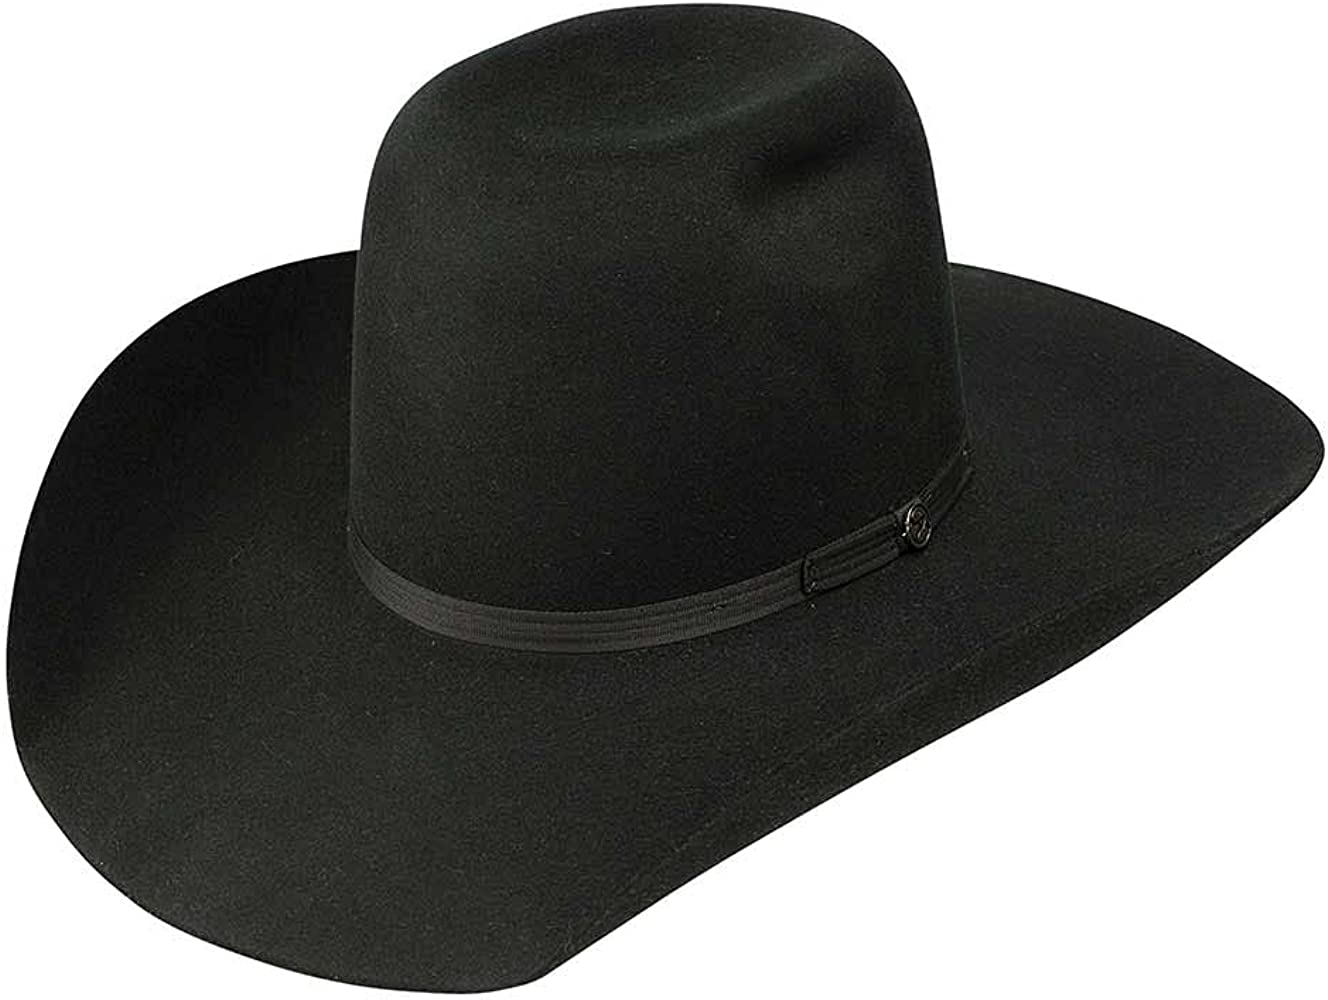 Hooey Day Money Resistol Black Cowboy Hat